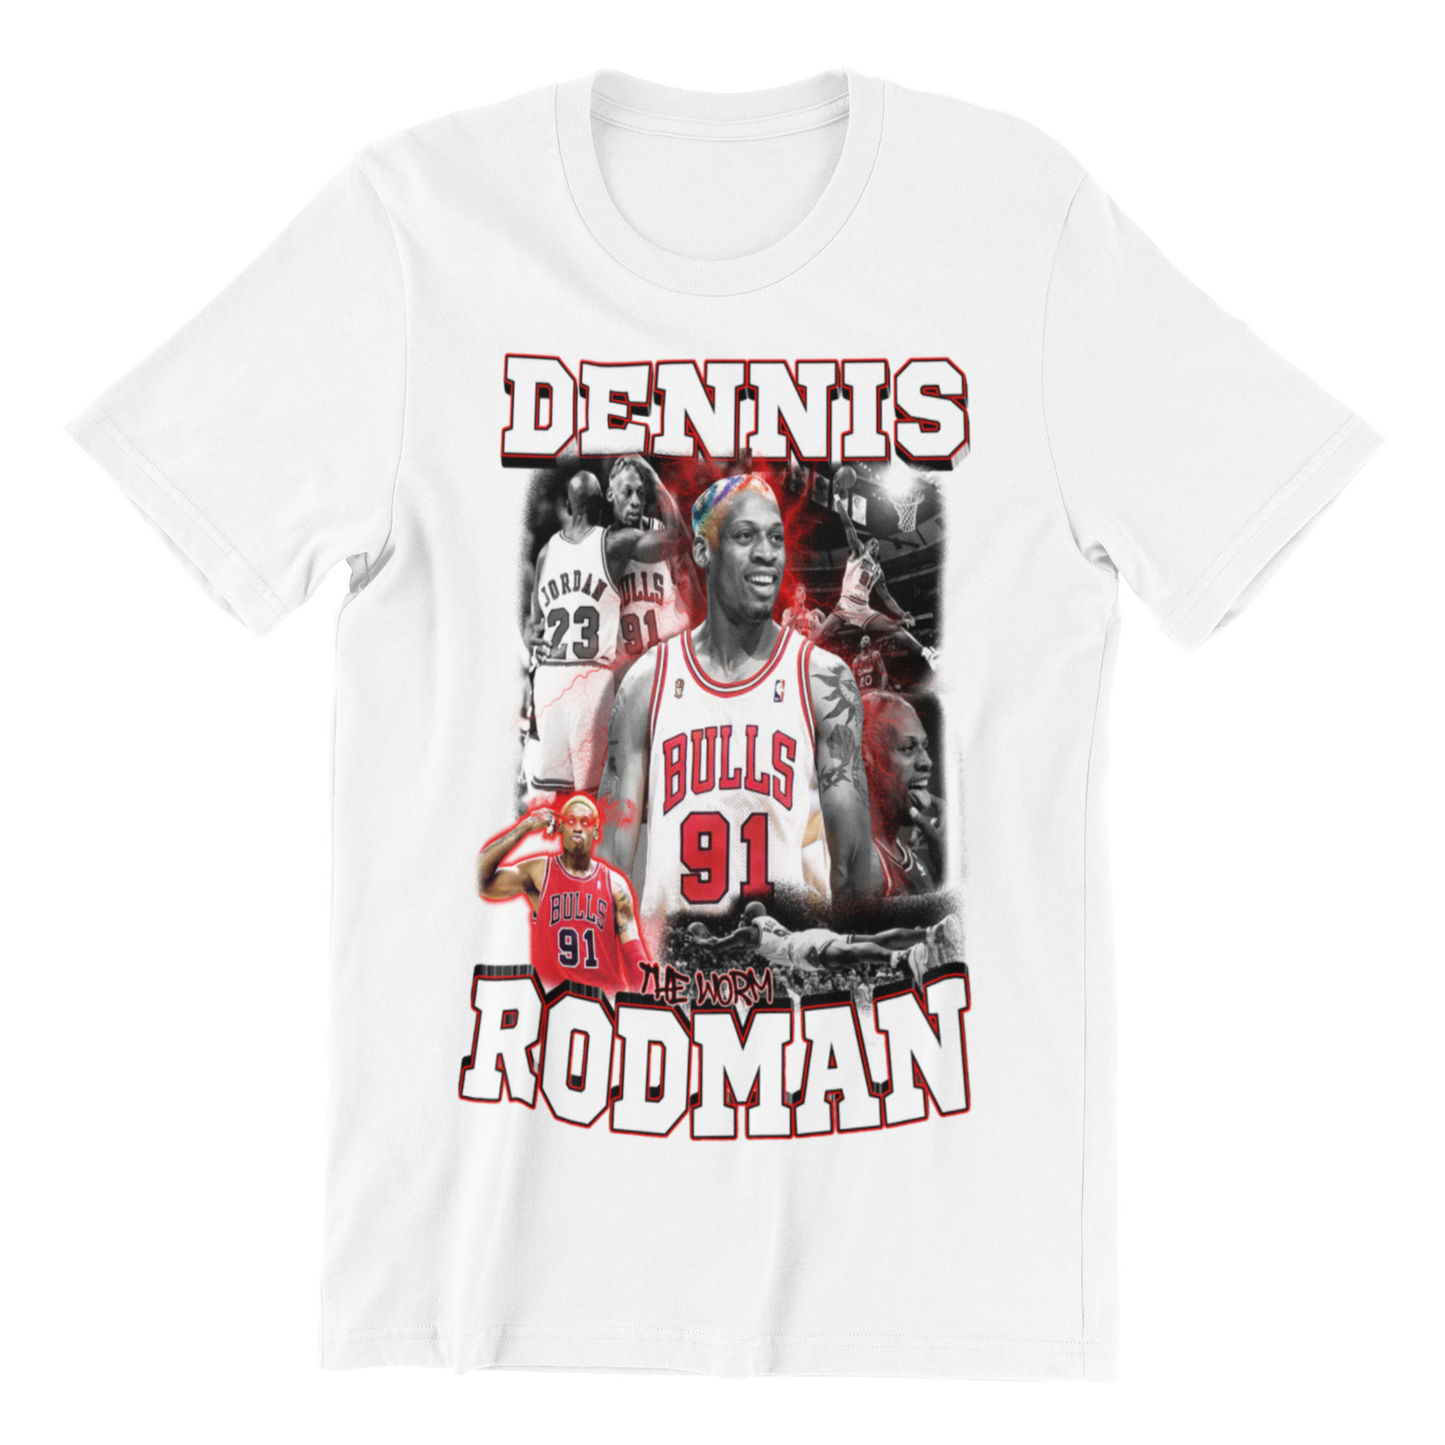 Dennis Rodman: The Iconic Bad Boy of Basketball